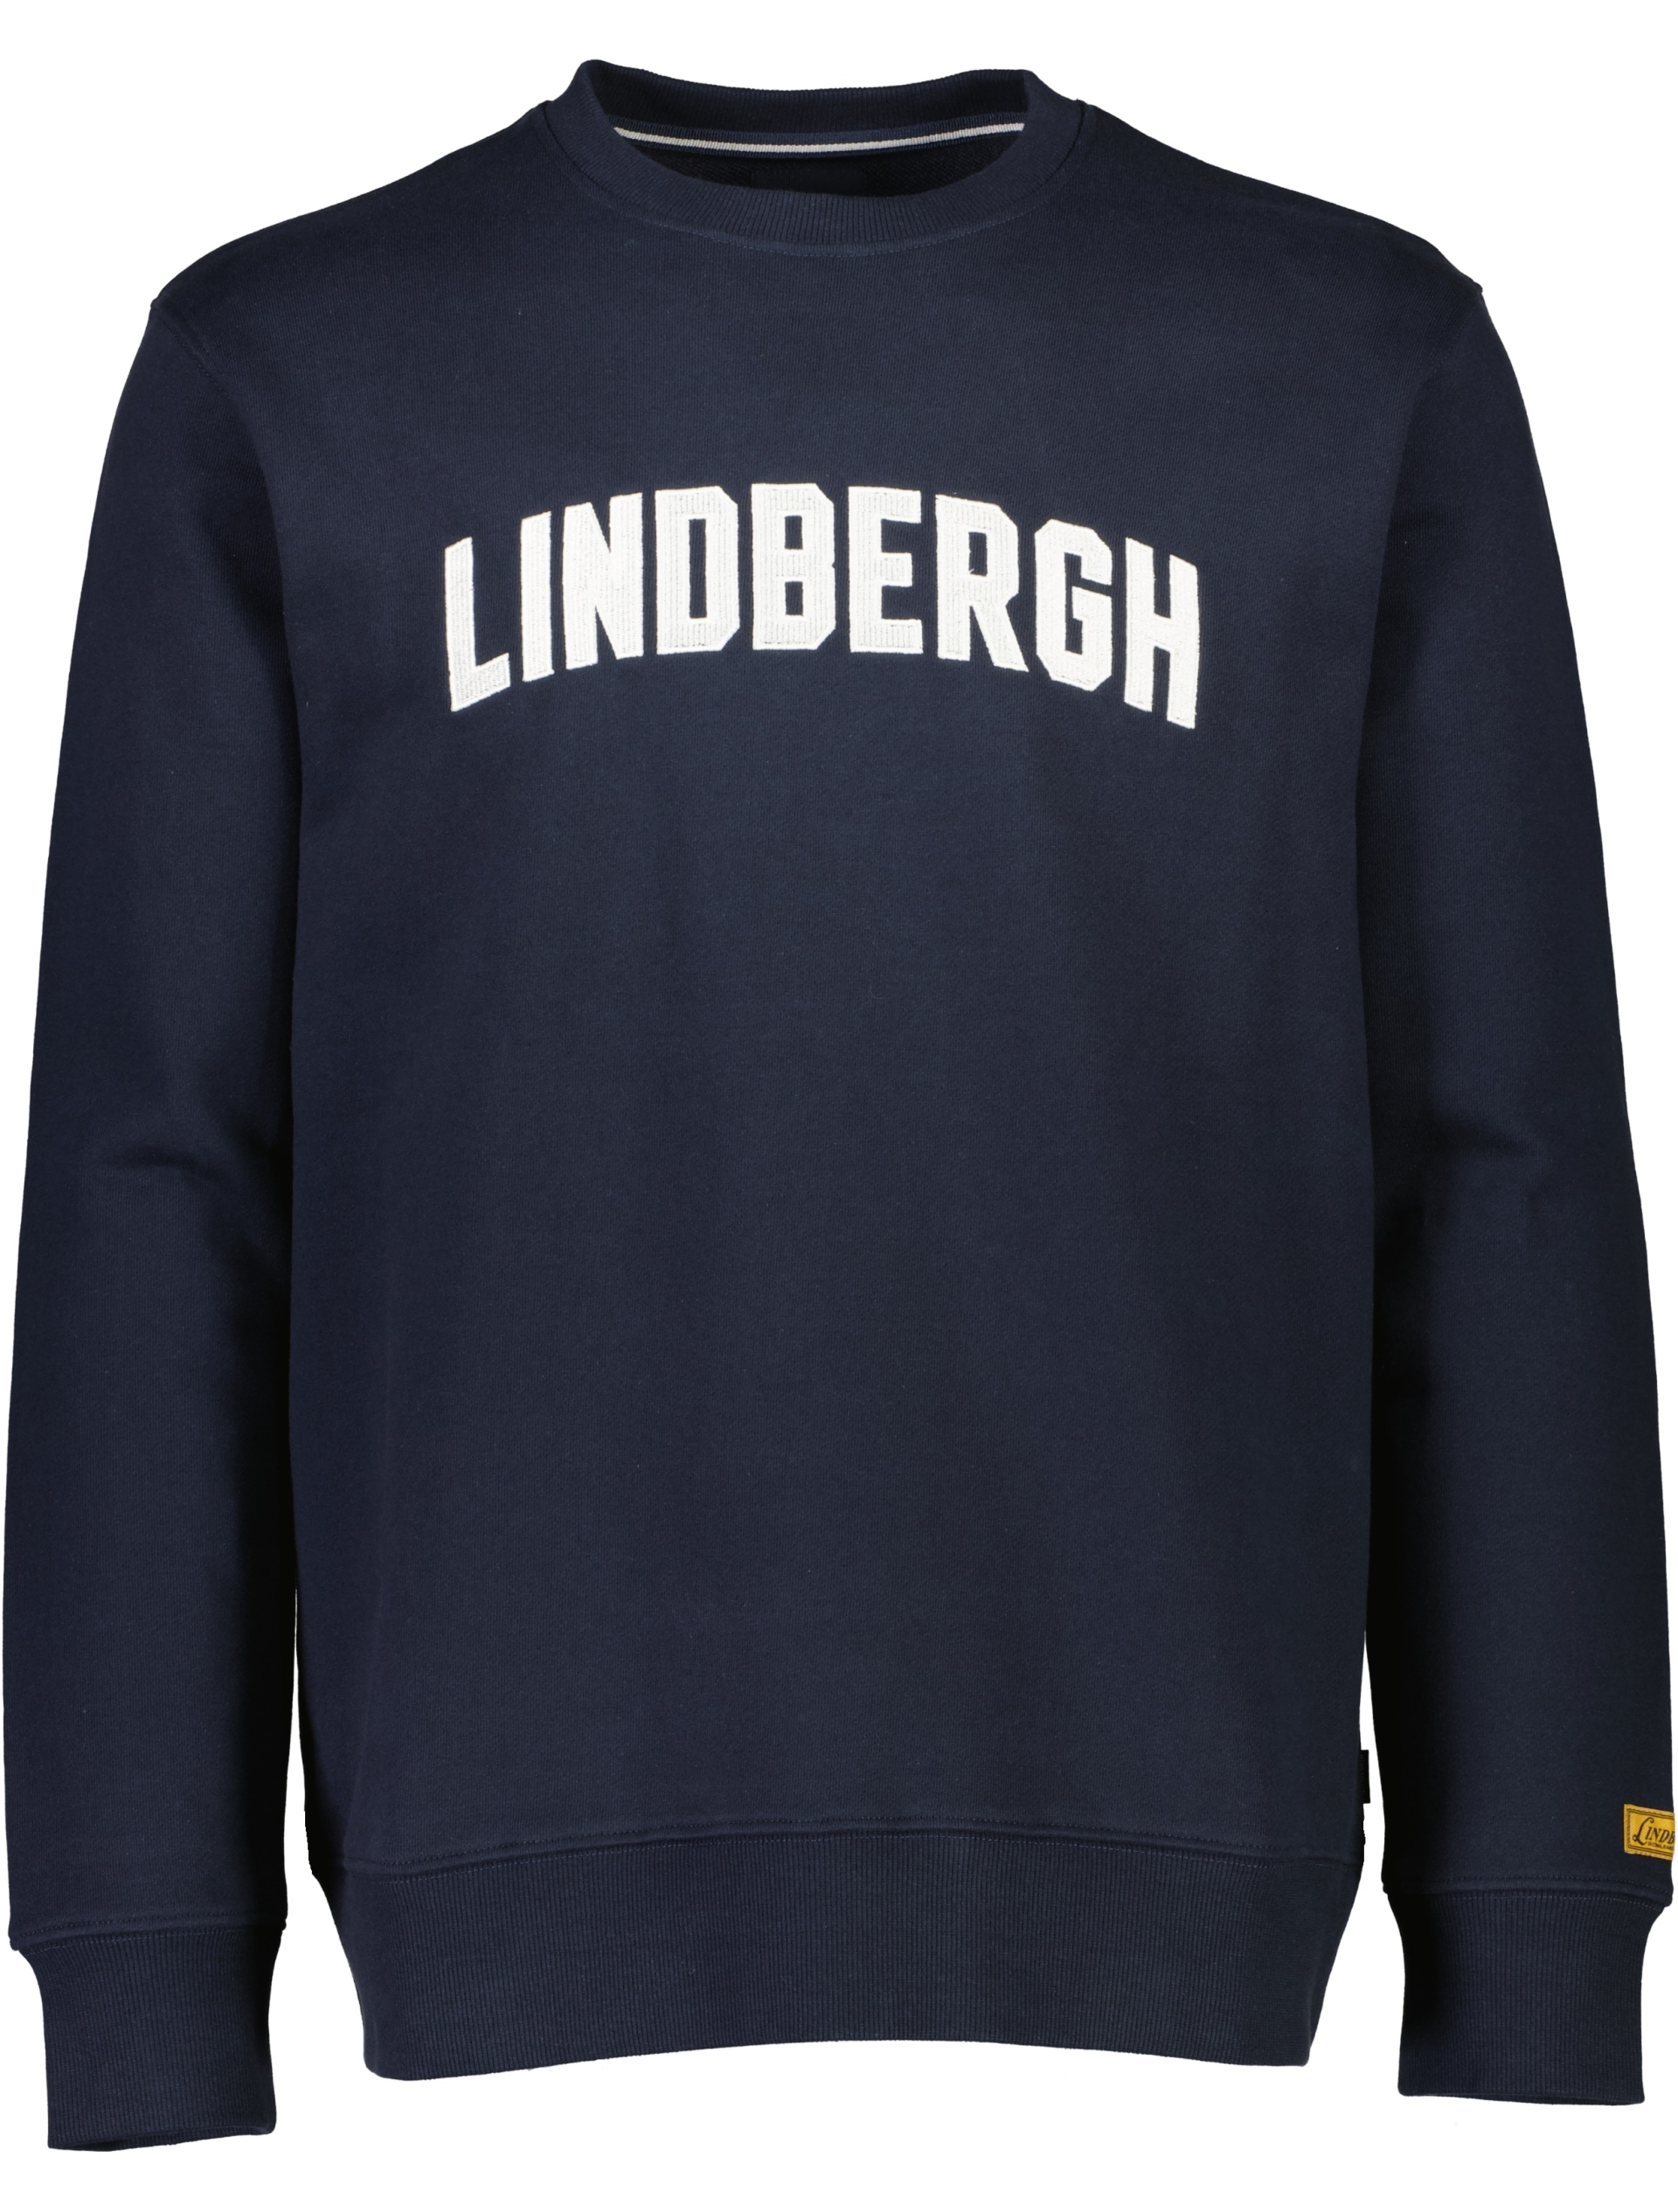 Lindbergh Sweatshirt blå / navy